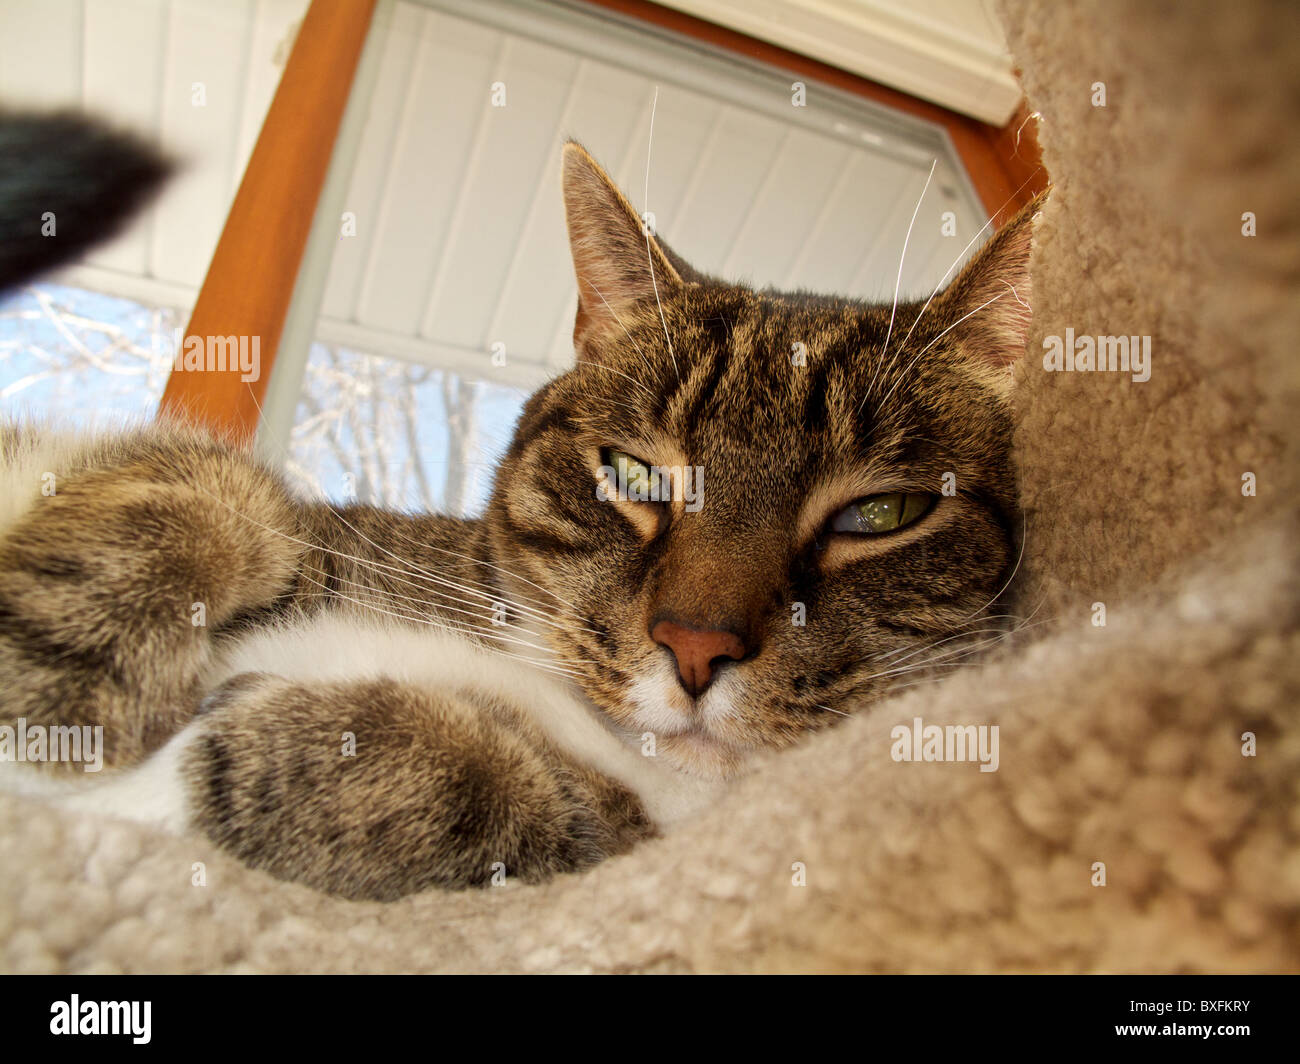 Brown tabby cat. Nicitating membrane visible. Stock Photo